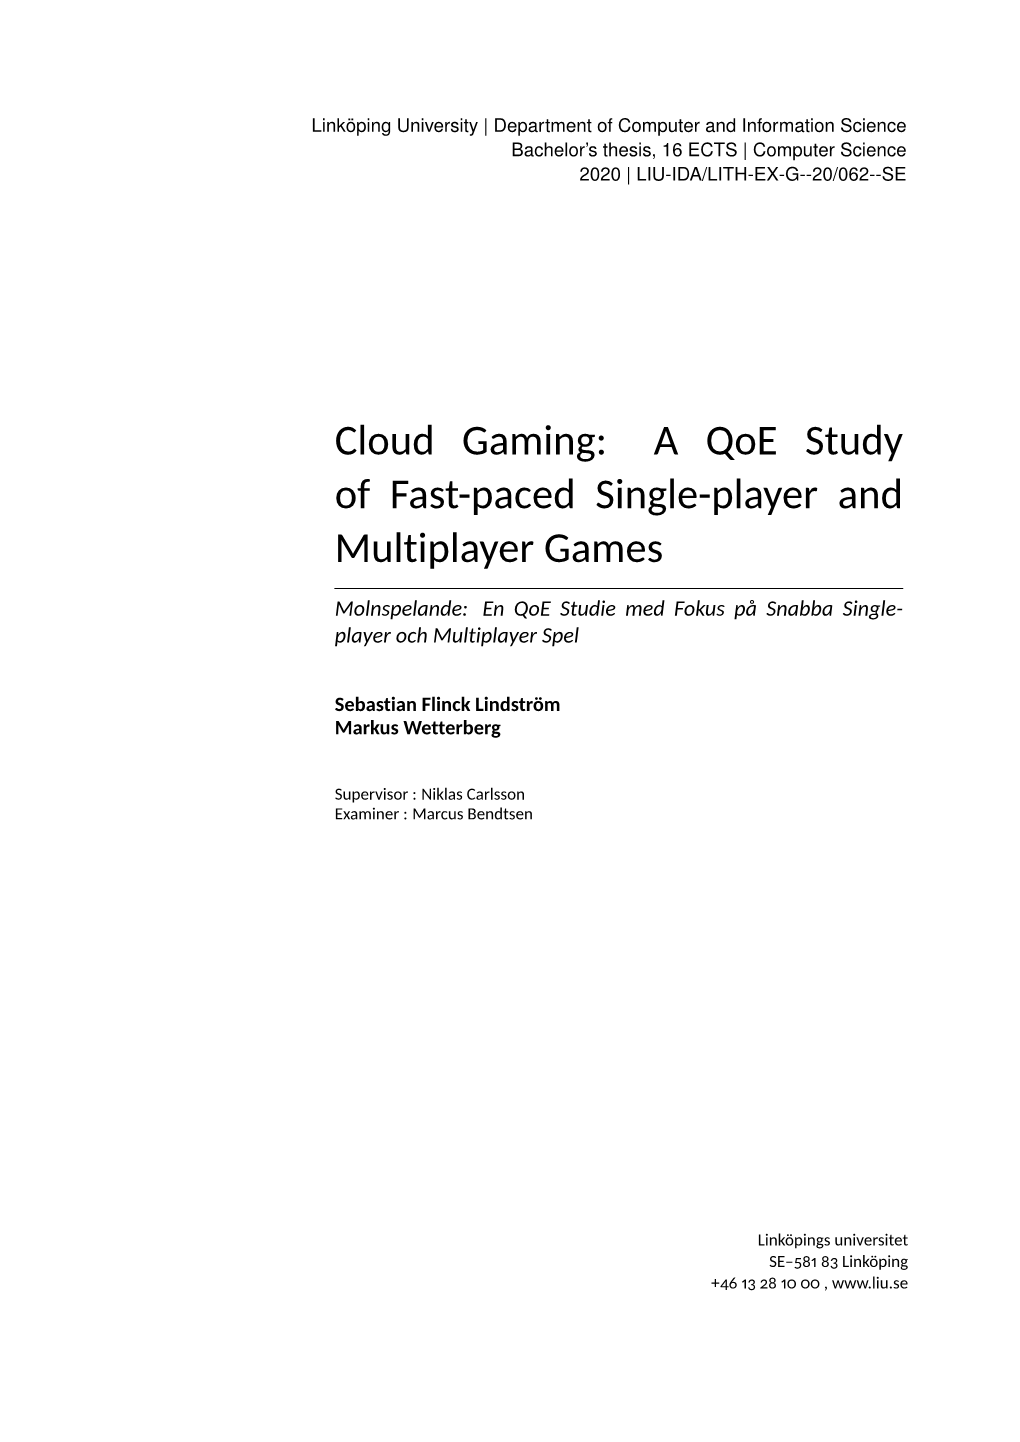 Cloud Gaming: a Qoe Study of Fast-Paced Single-Player and Multiplayer Games Molnspelande: En Qoe Studie Med Fokus På Snabba Single- Player Och Multiplayer Spel